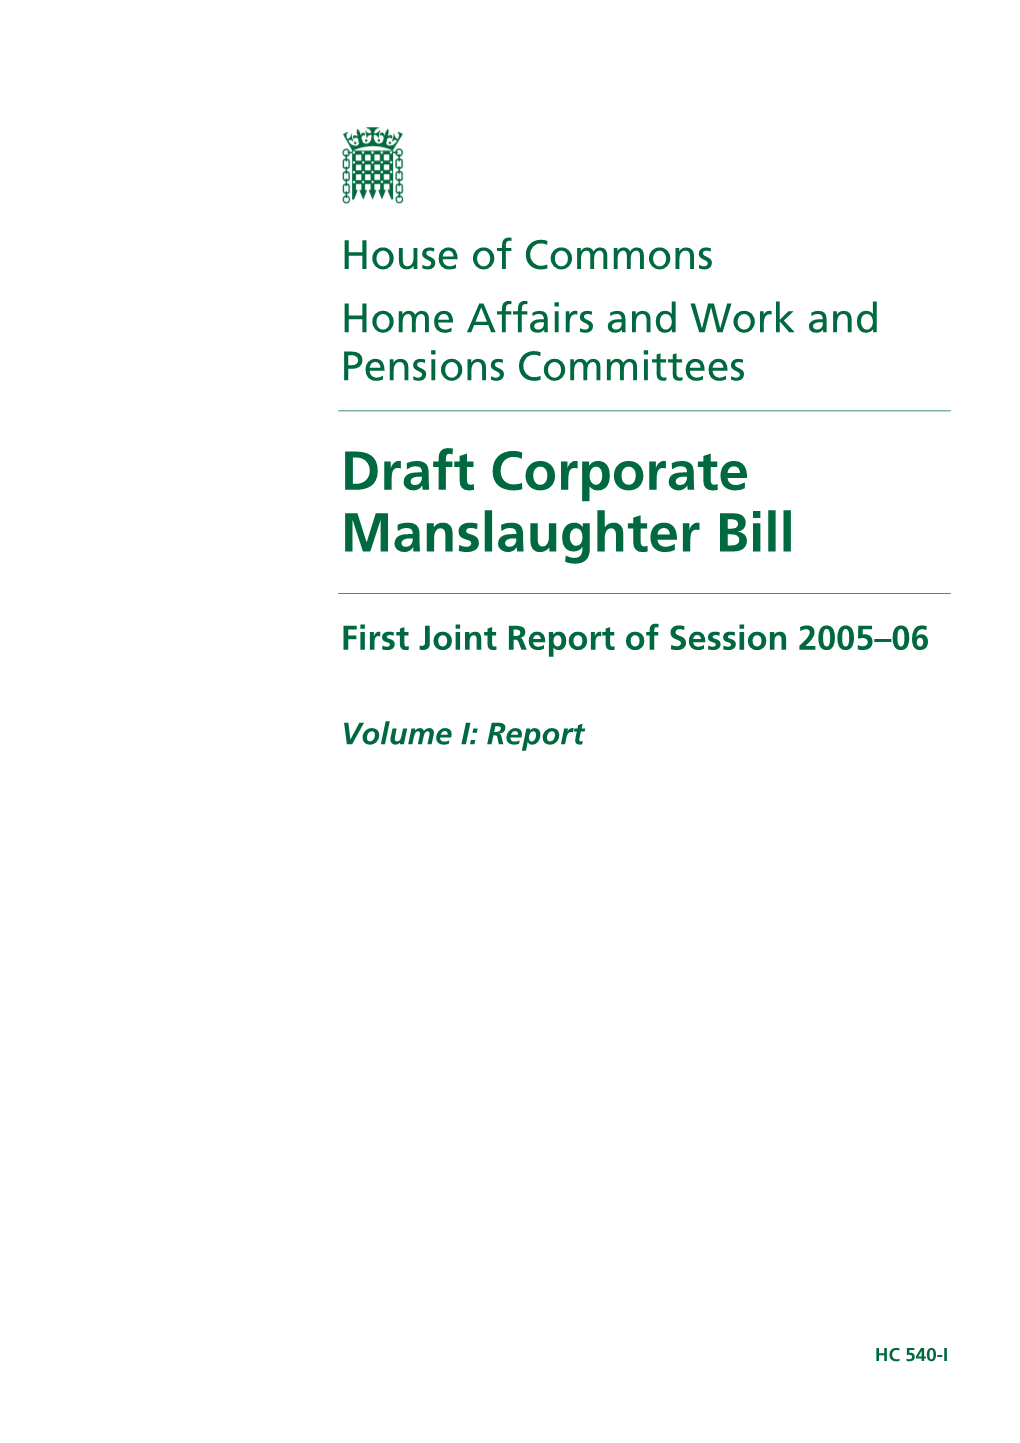 Draft Corporate Manslaughter Bill